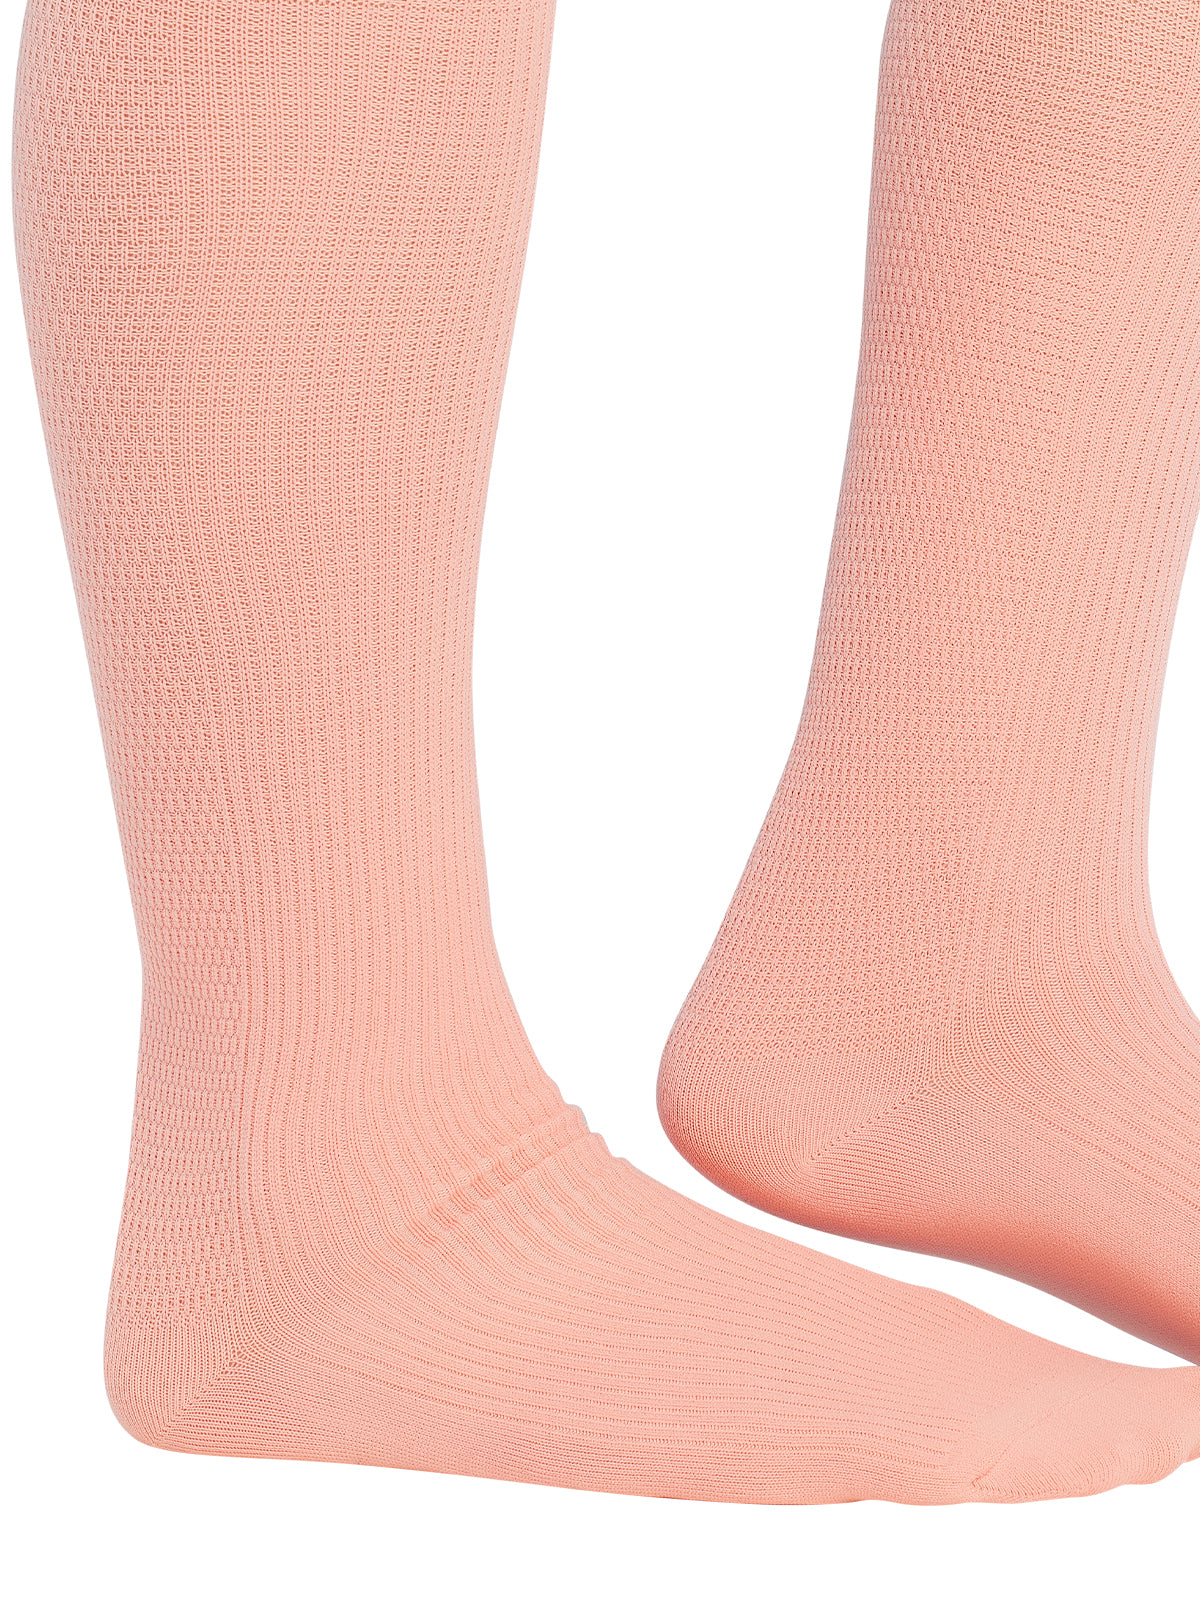 Women's 4 Single Pairs of Support Socks